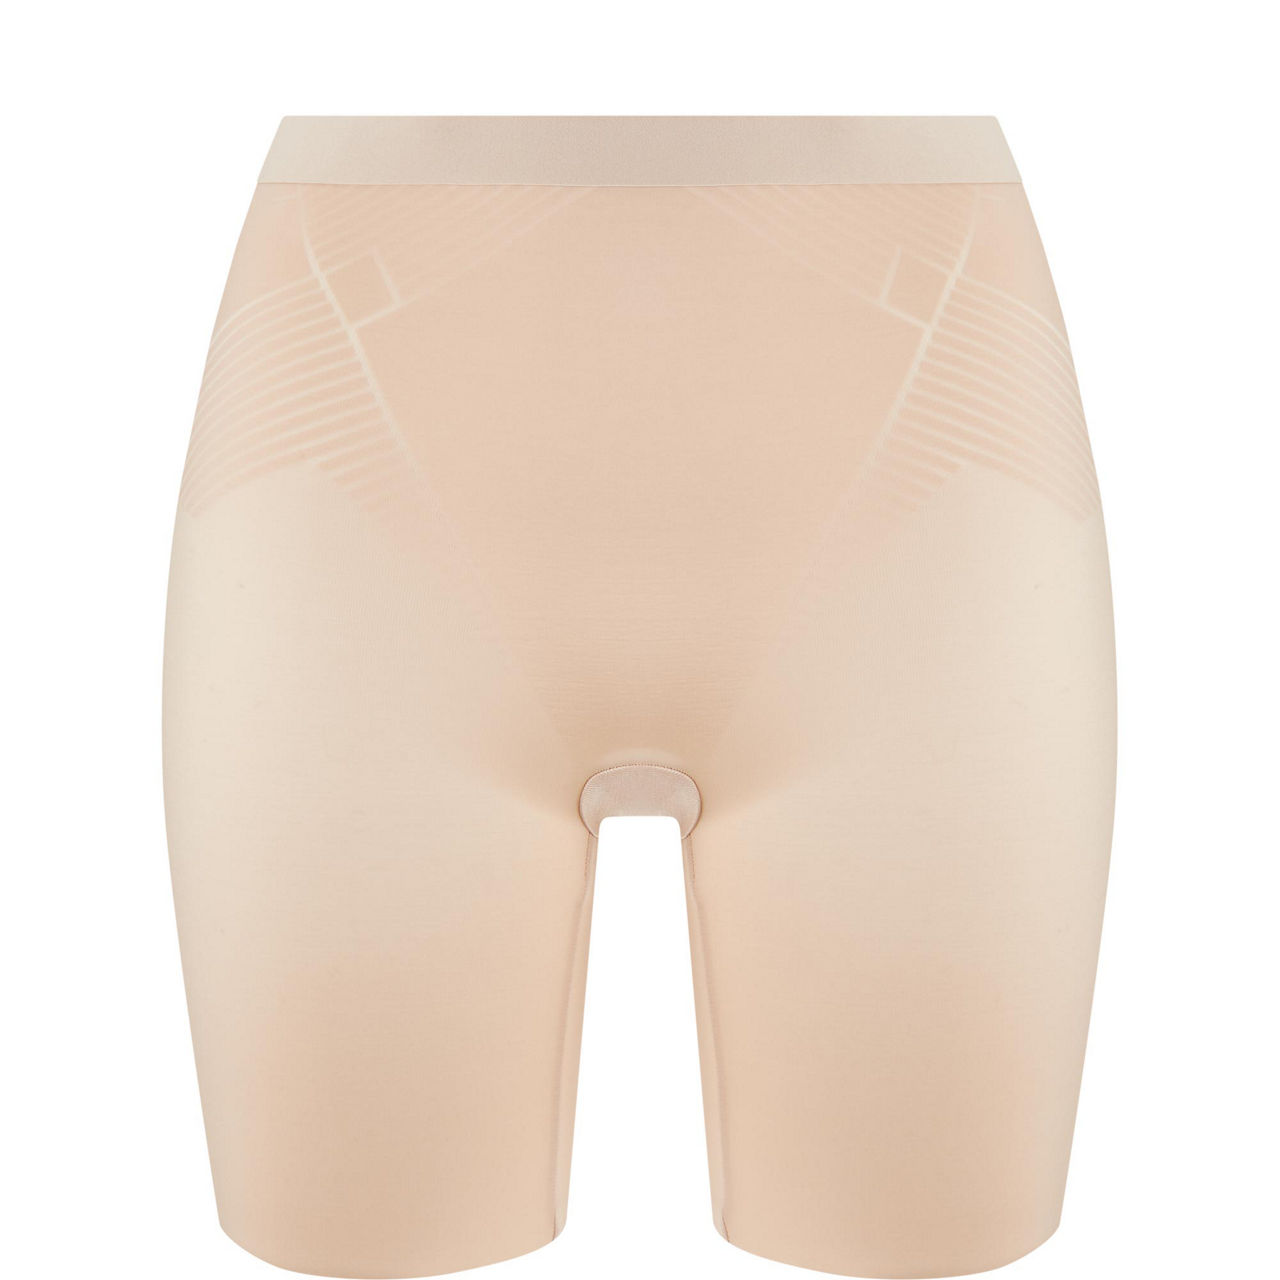 UNIQLO women body shaper non-lined shorts (Support type), Women's